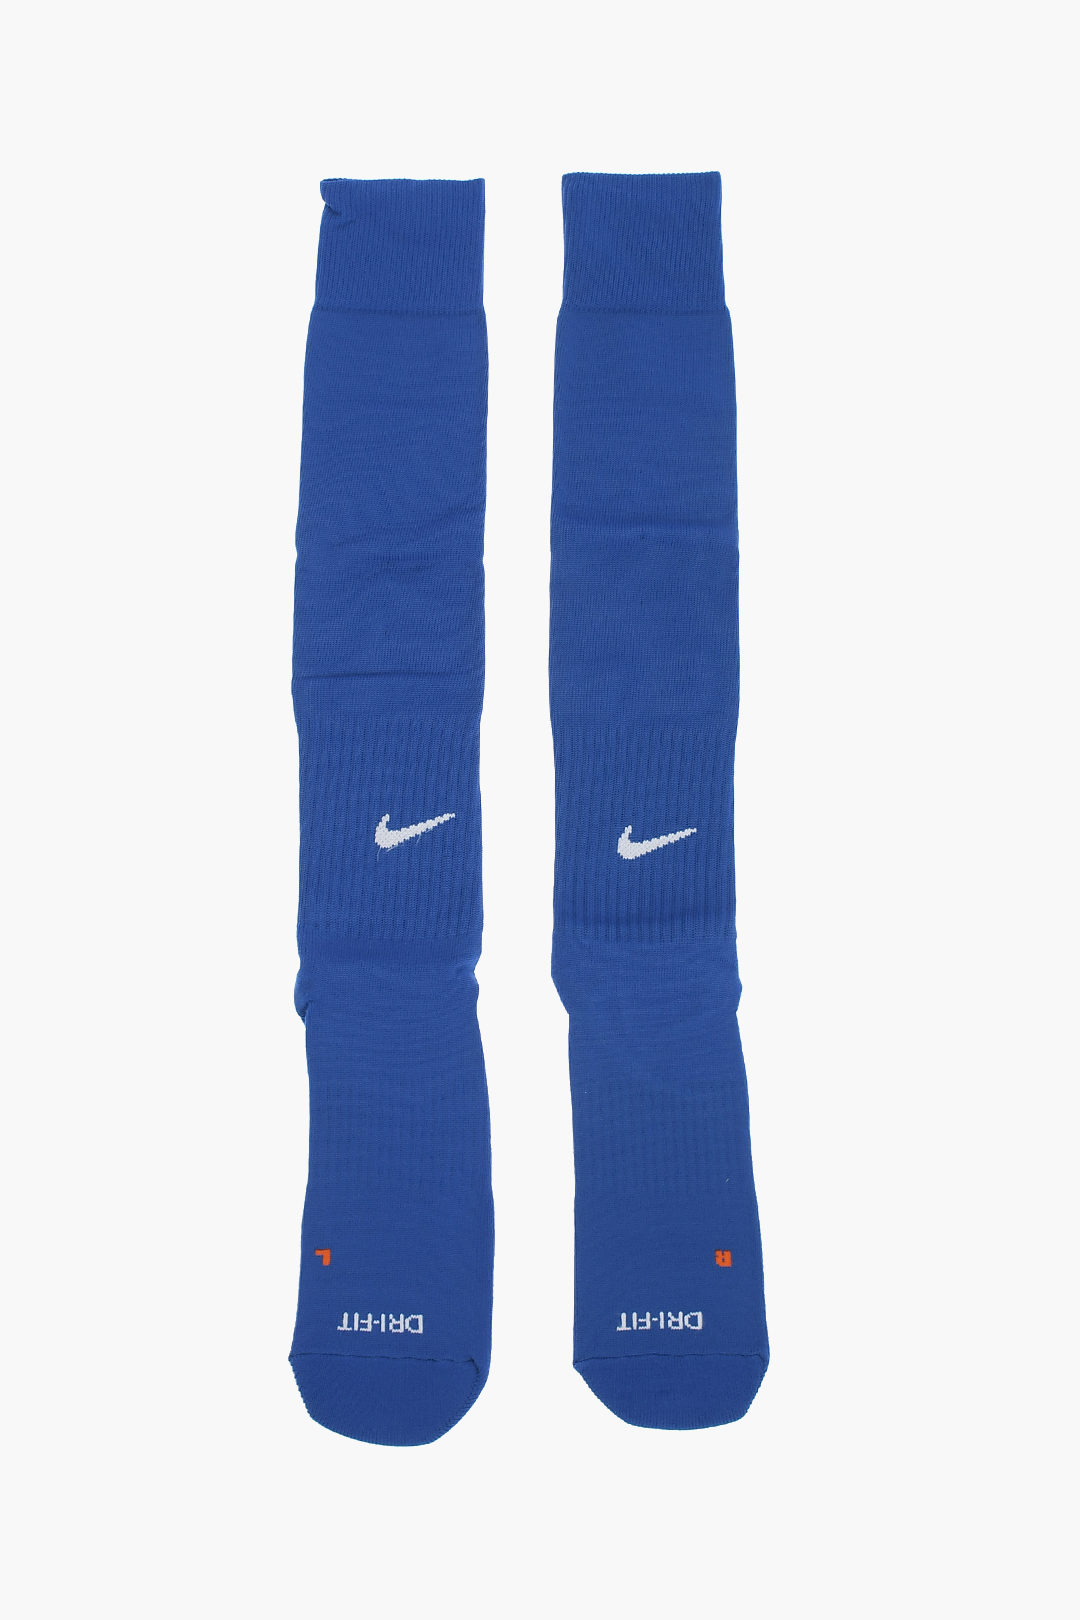 programa Ubicación Deportista Nike Logo Embroidered Football Long Socks men - Glamood Outlet